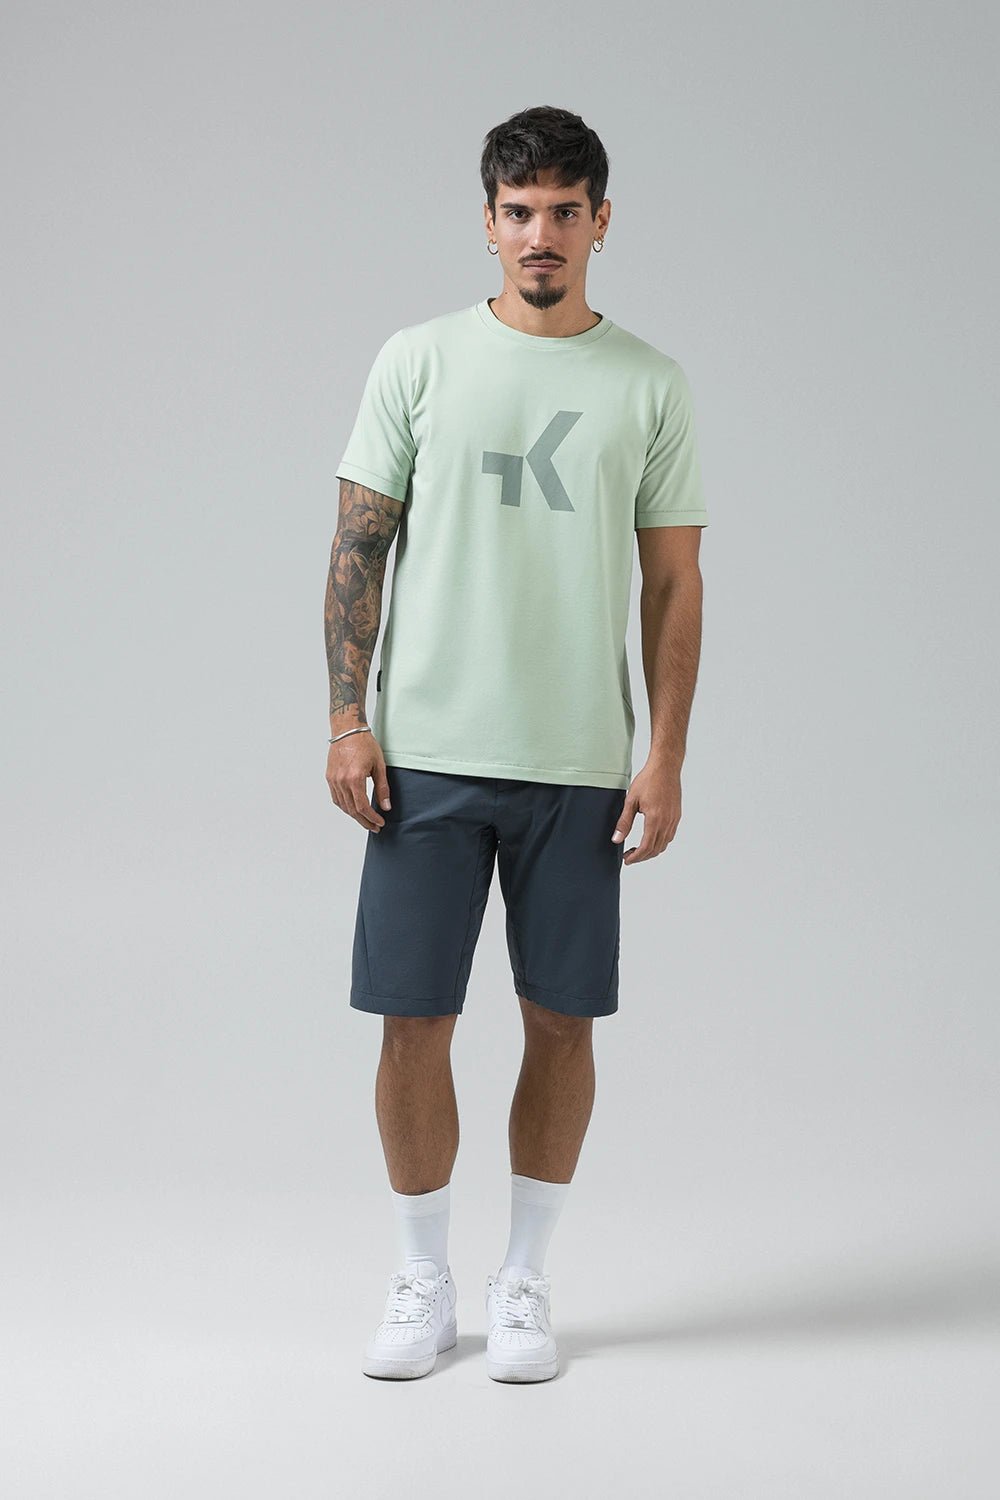 Hommes Lifestyle Vêtements. Nike LU